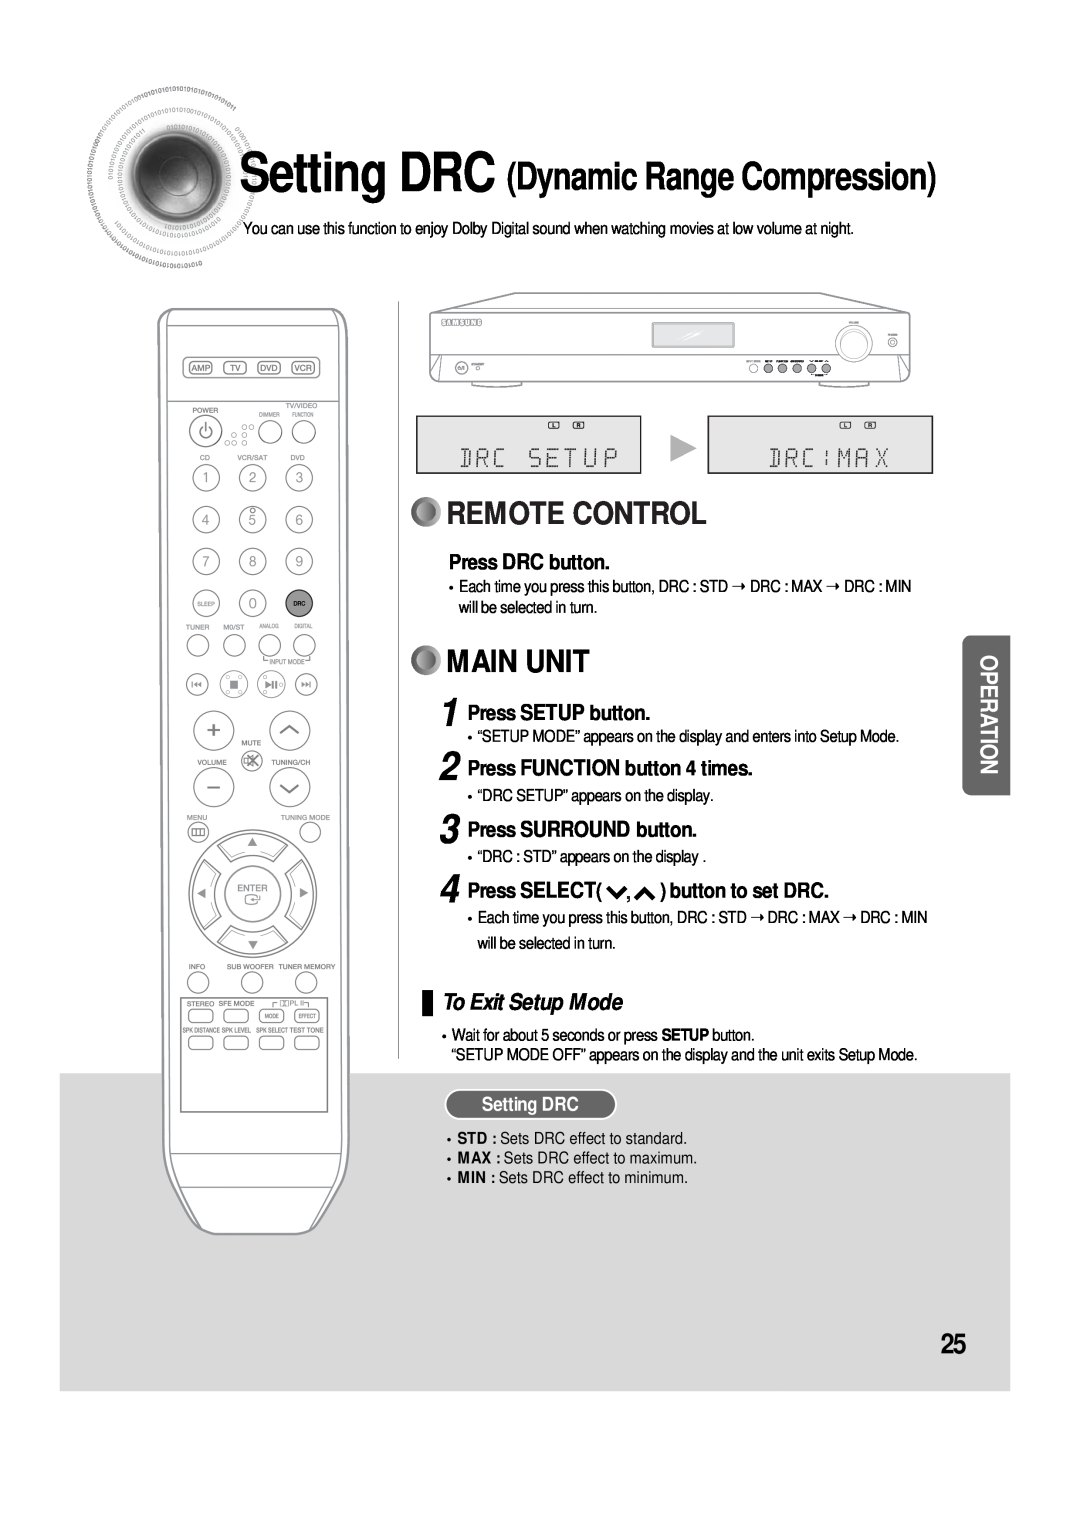 Samsung AV-R610 Remote Control, Main Unit, SettingDRC Dynamic Range Compression, To Exit Setup Mode, Press DRC button 